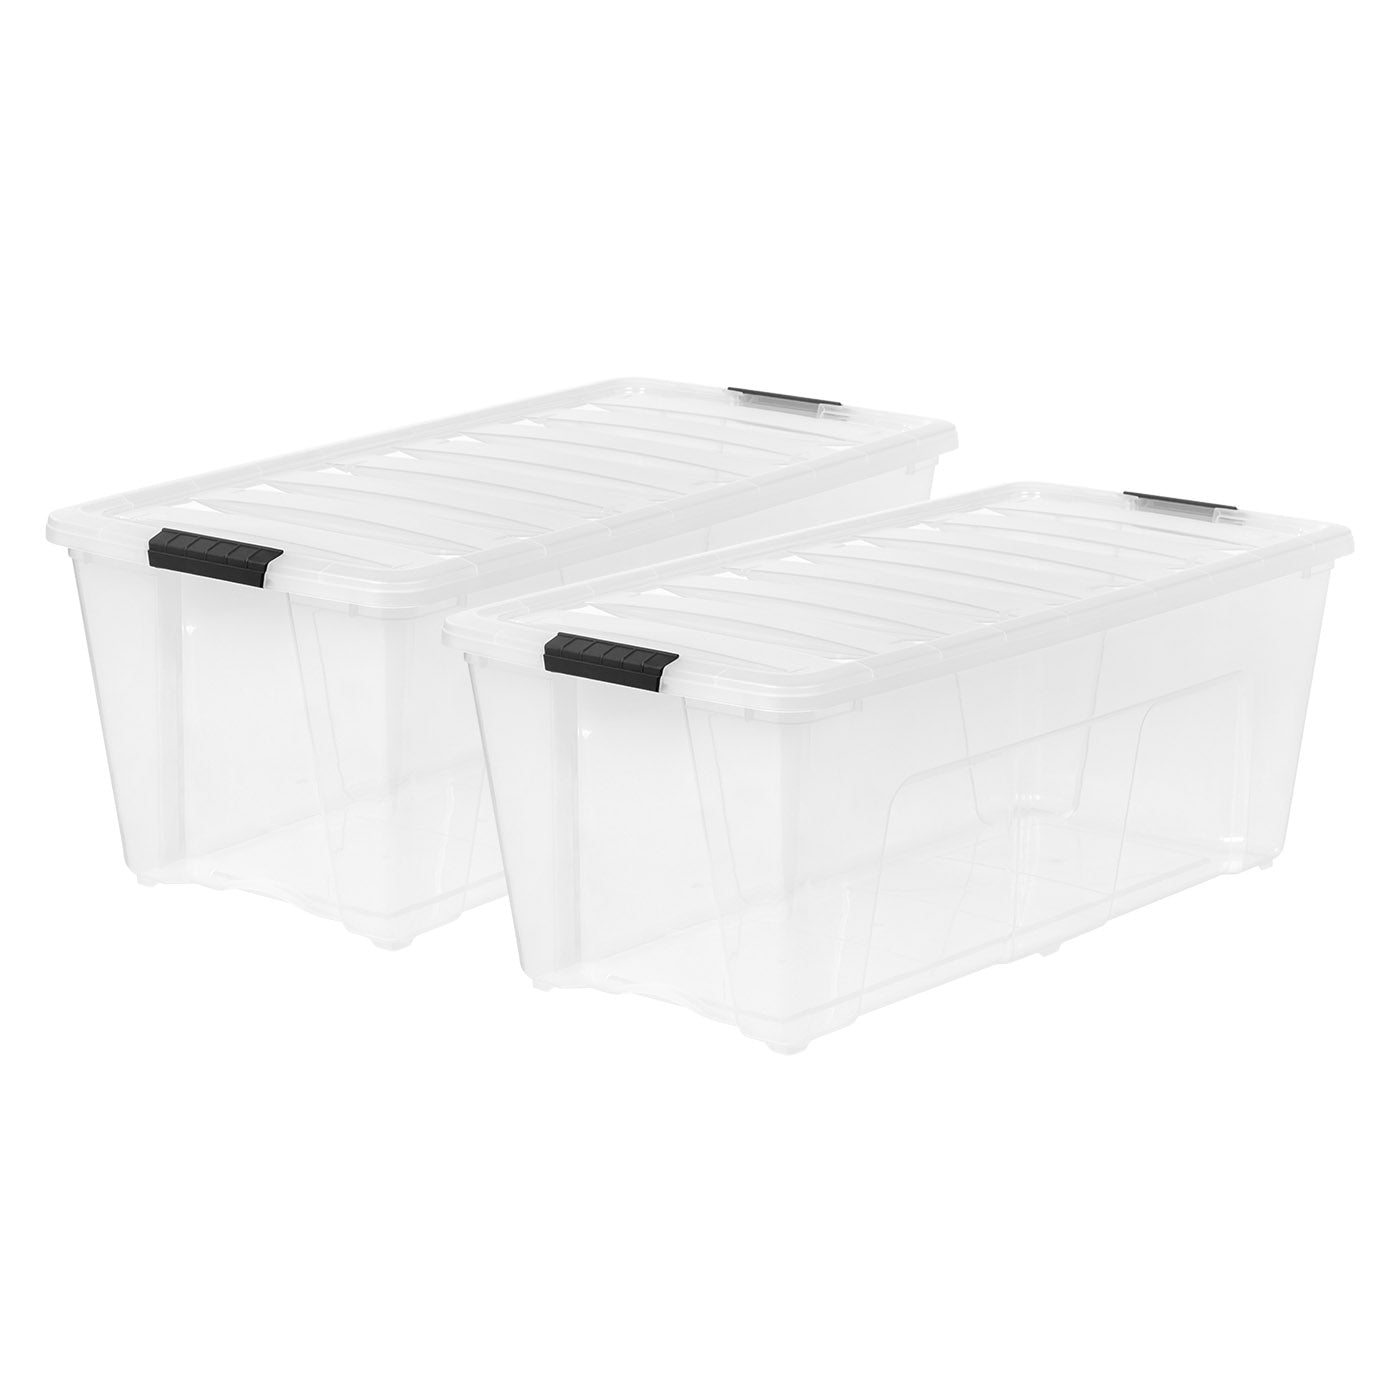 Clear Plastic Storage Bins, 2-Pack